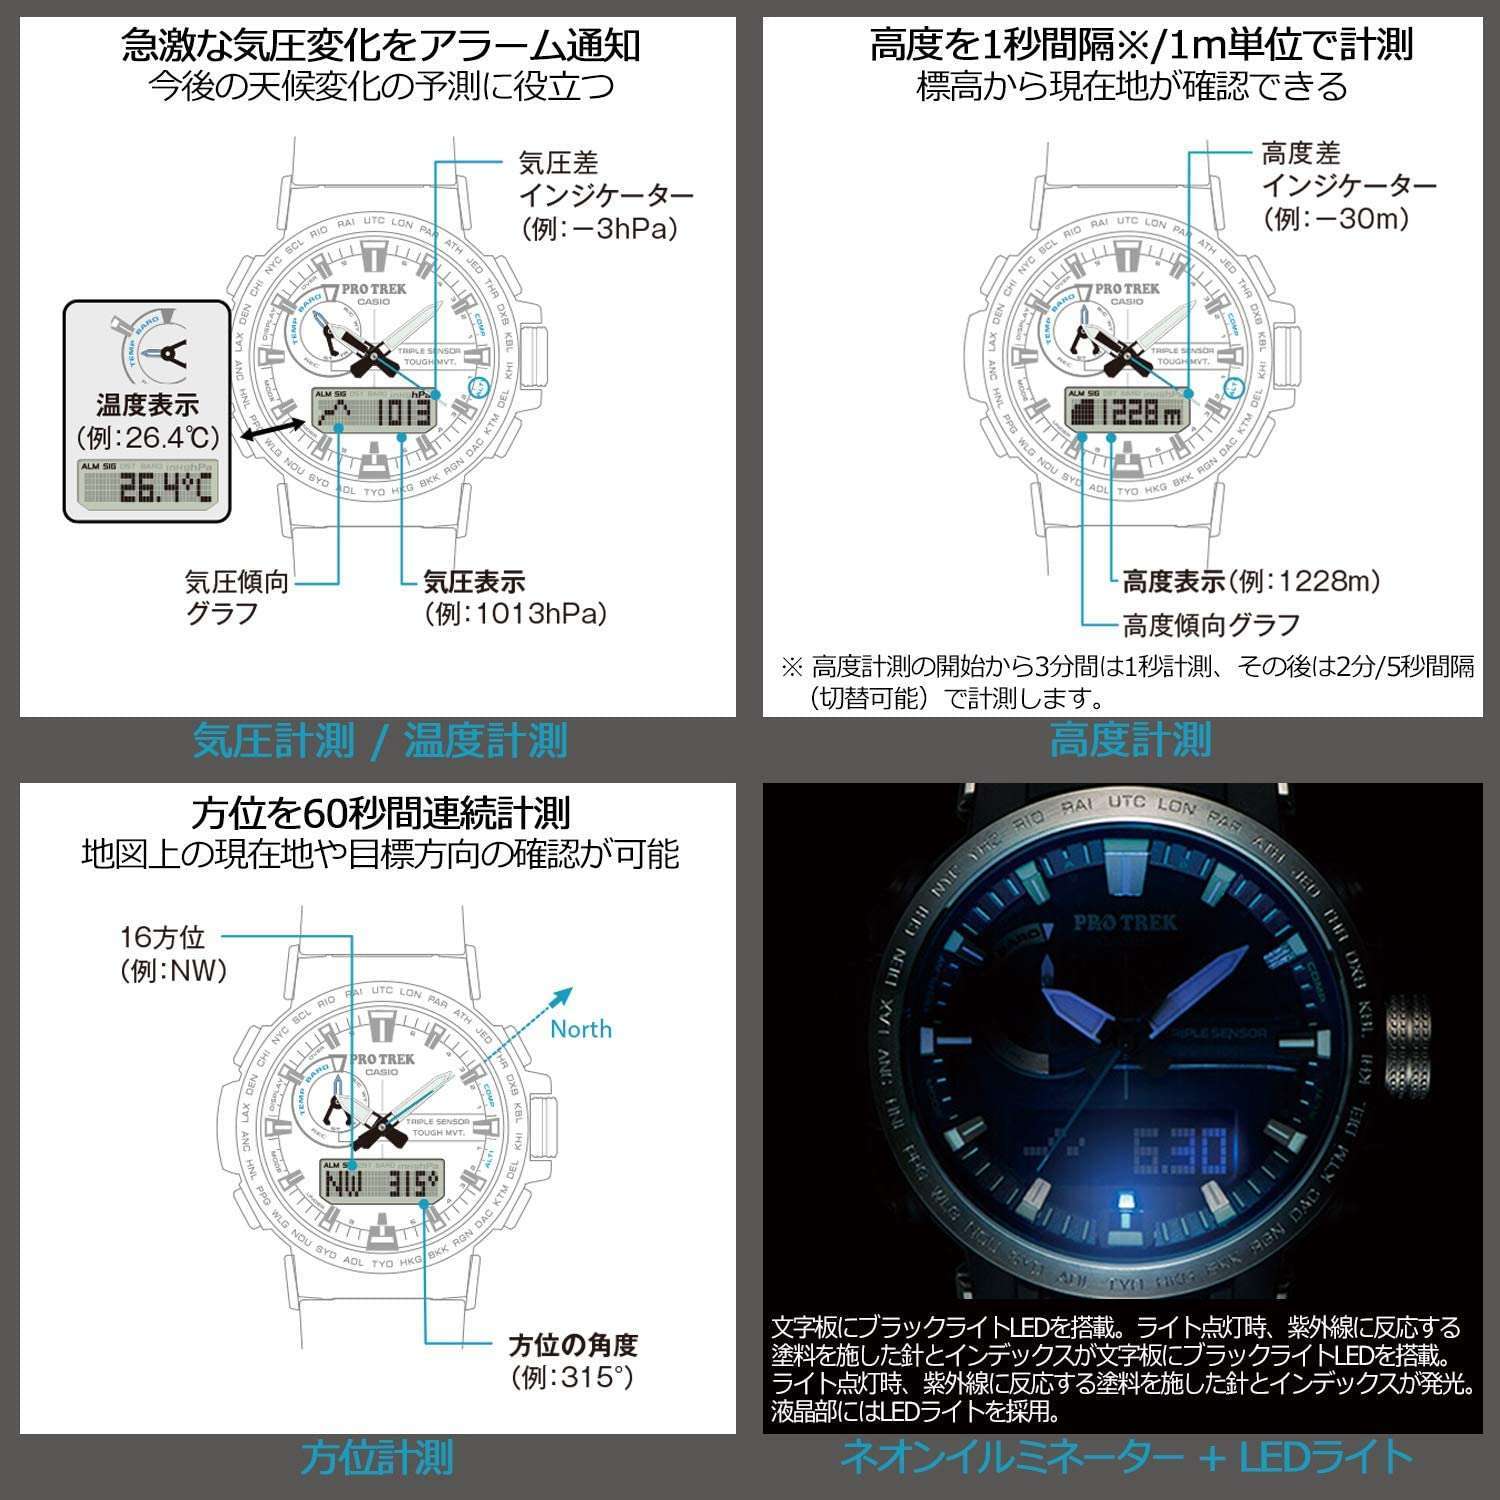 ROOK JAPAN:CASIO PROTREK CLIMBER LINE JDM MEN WATCH PRW-60Y-1AJF,JDM Watch,Casio Protrek